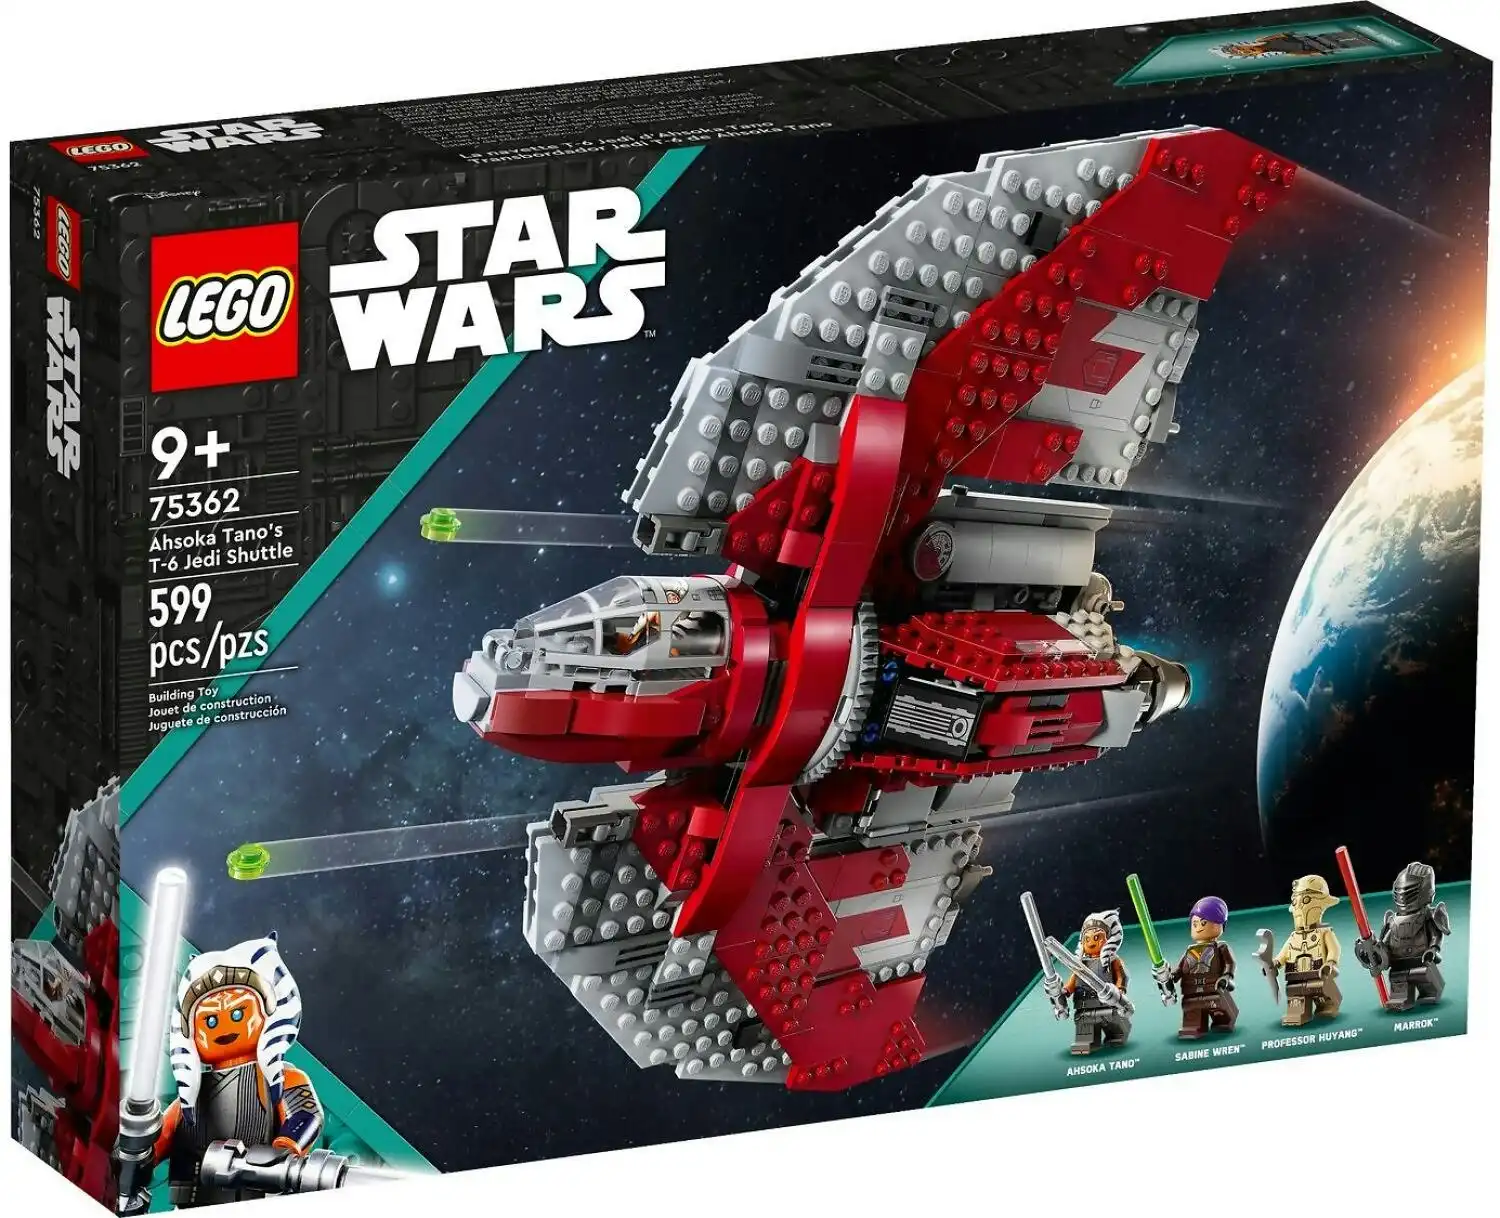 LEGO 75362 Ahsoka Tano's T-6 Jedi Shuttle - Star Wars Tm